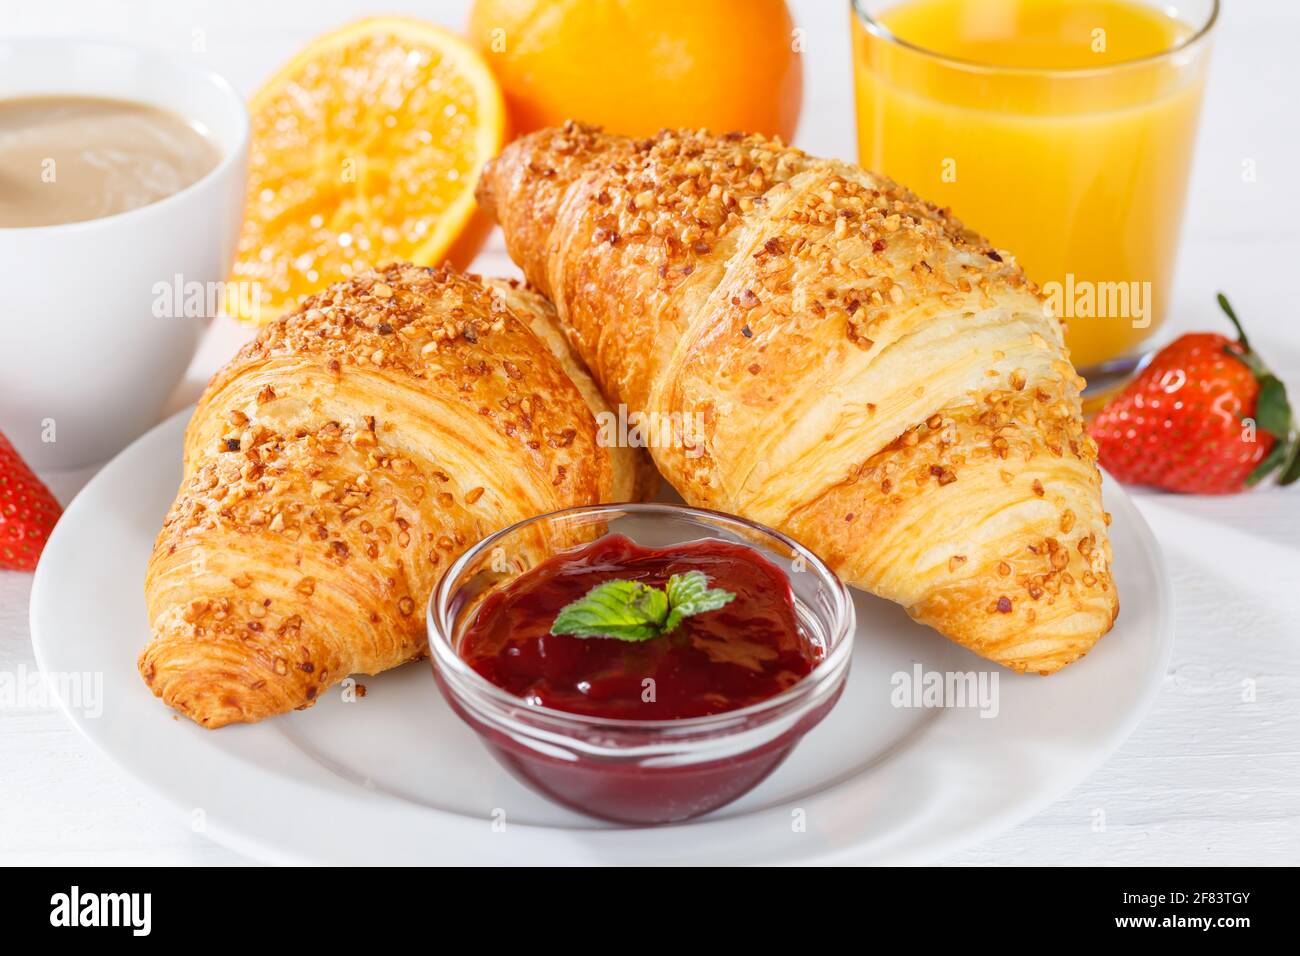 Croissant breakfast croissants orange juice coffee food hotel buffet jam marmelade Stock Photo